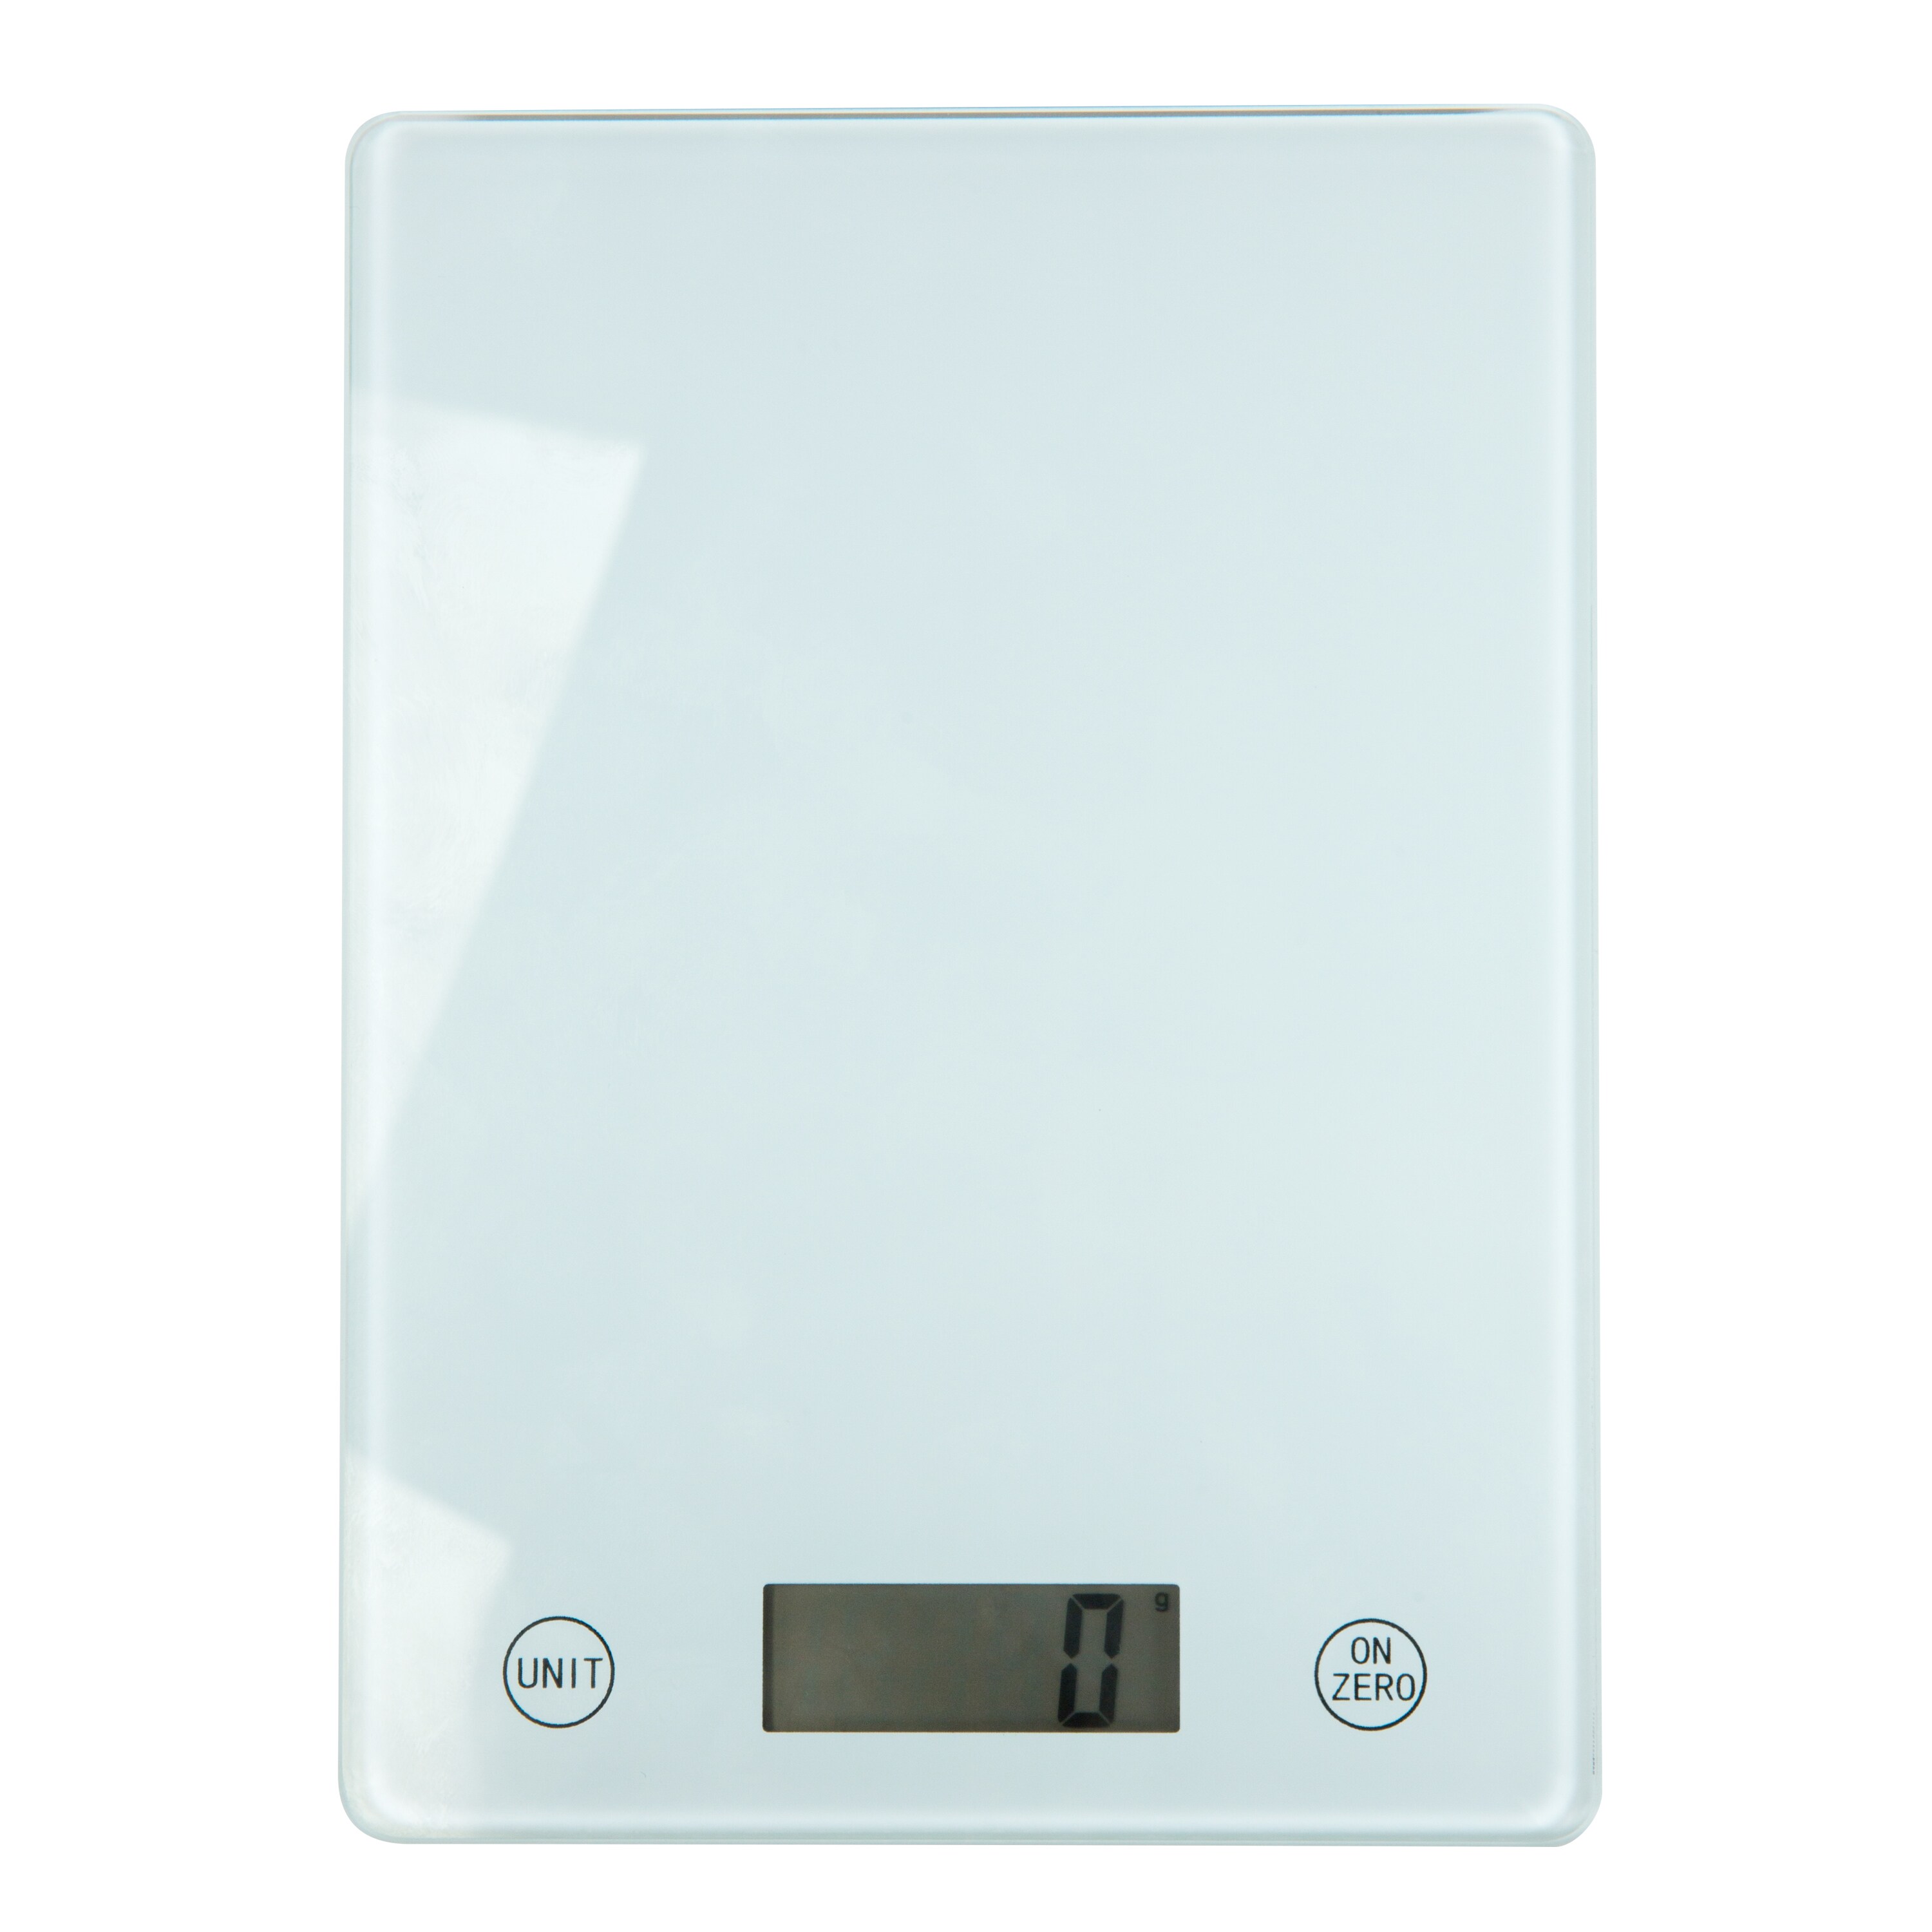 AccuChef Digital Kitchen Scale with Tempered Glass Platform, White